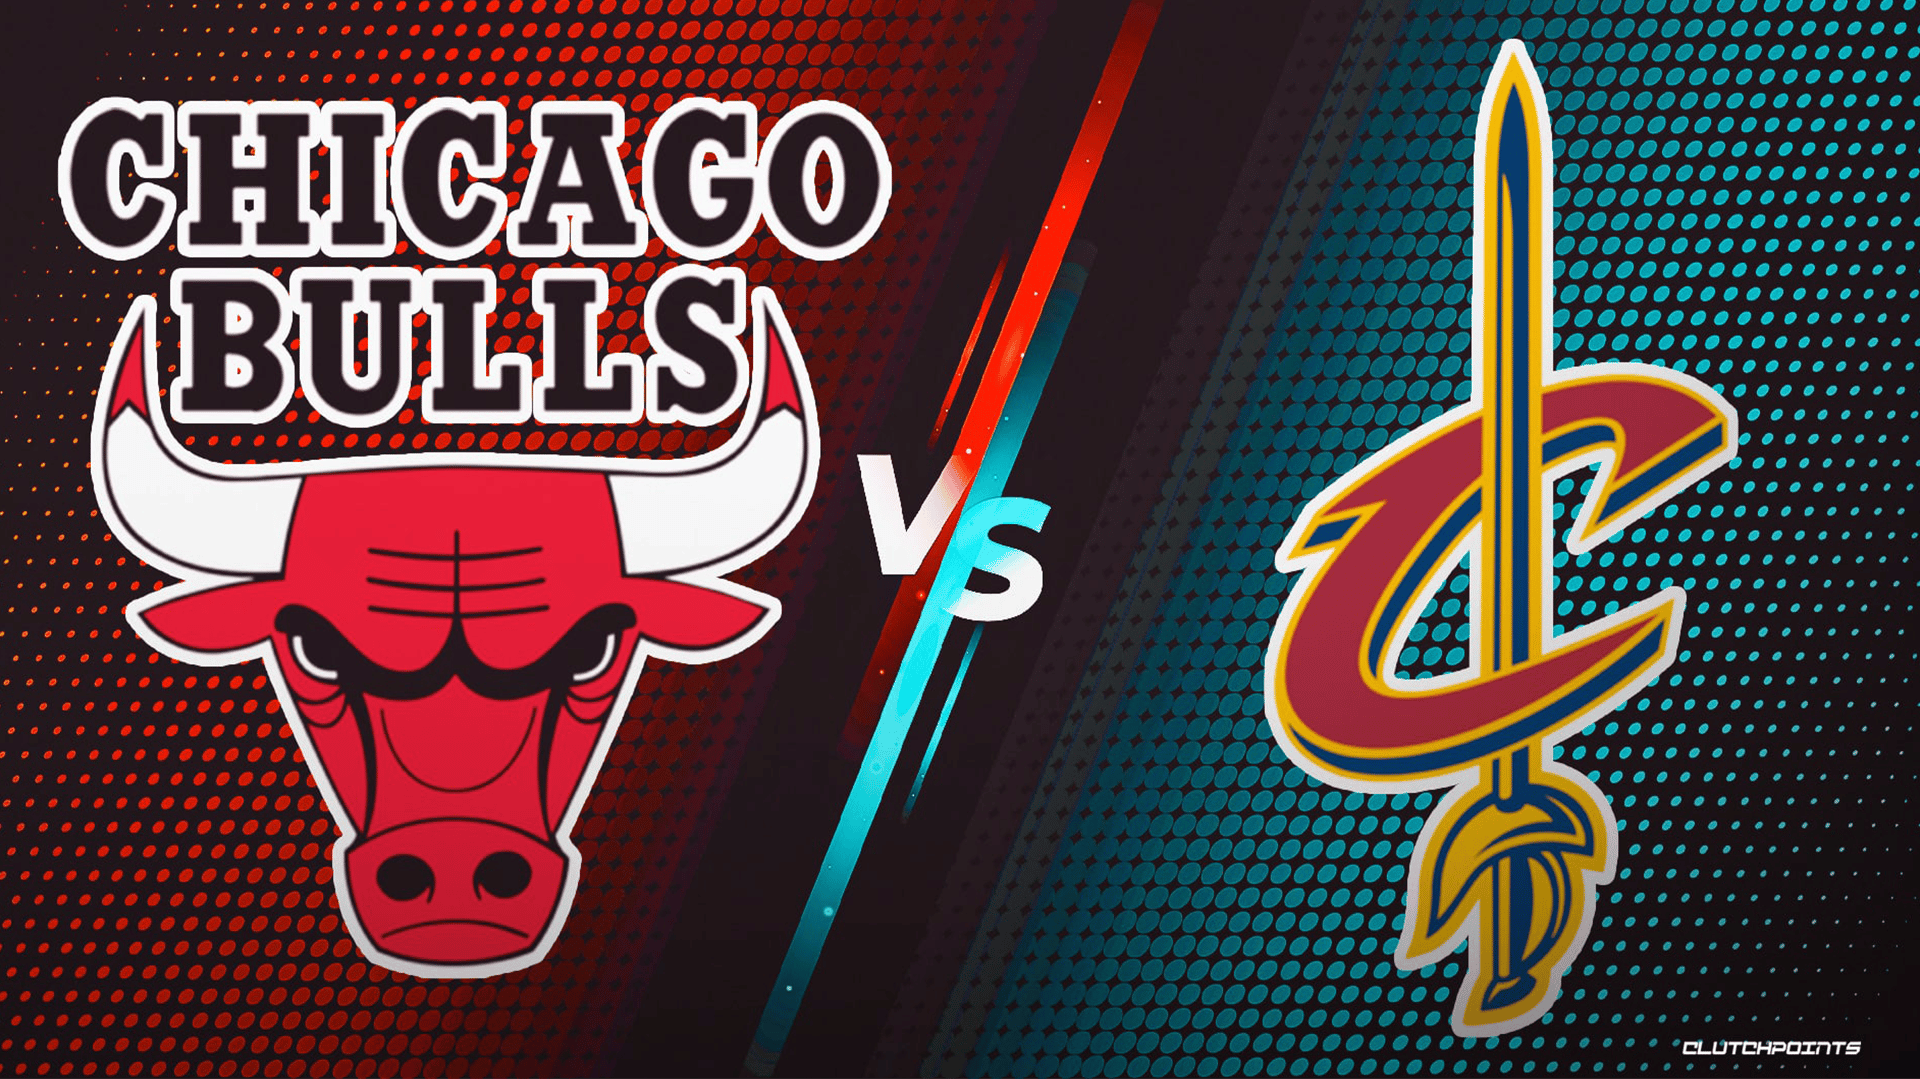 Bulls vs Cavs Logo